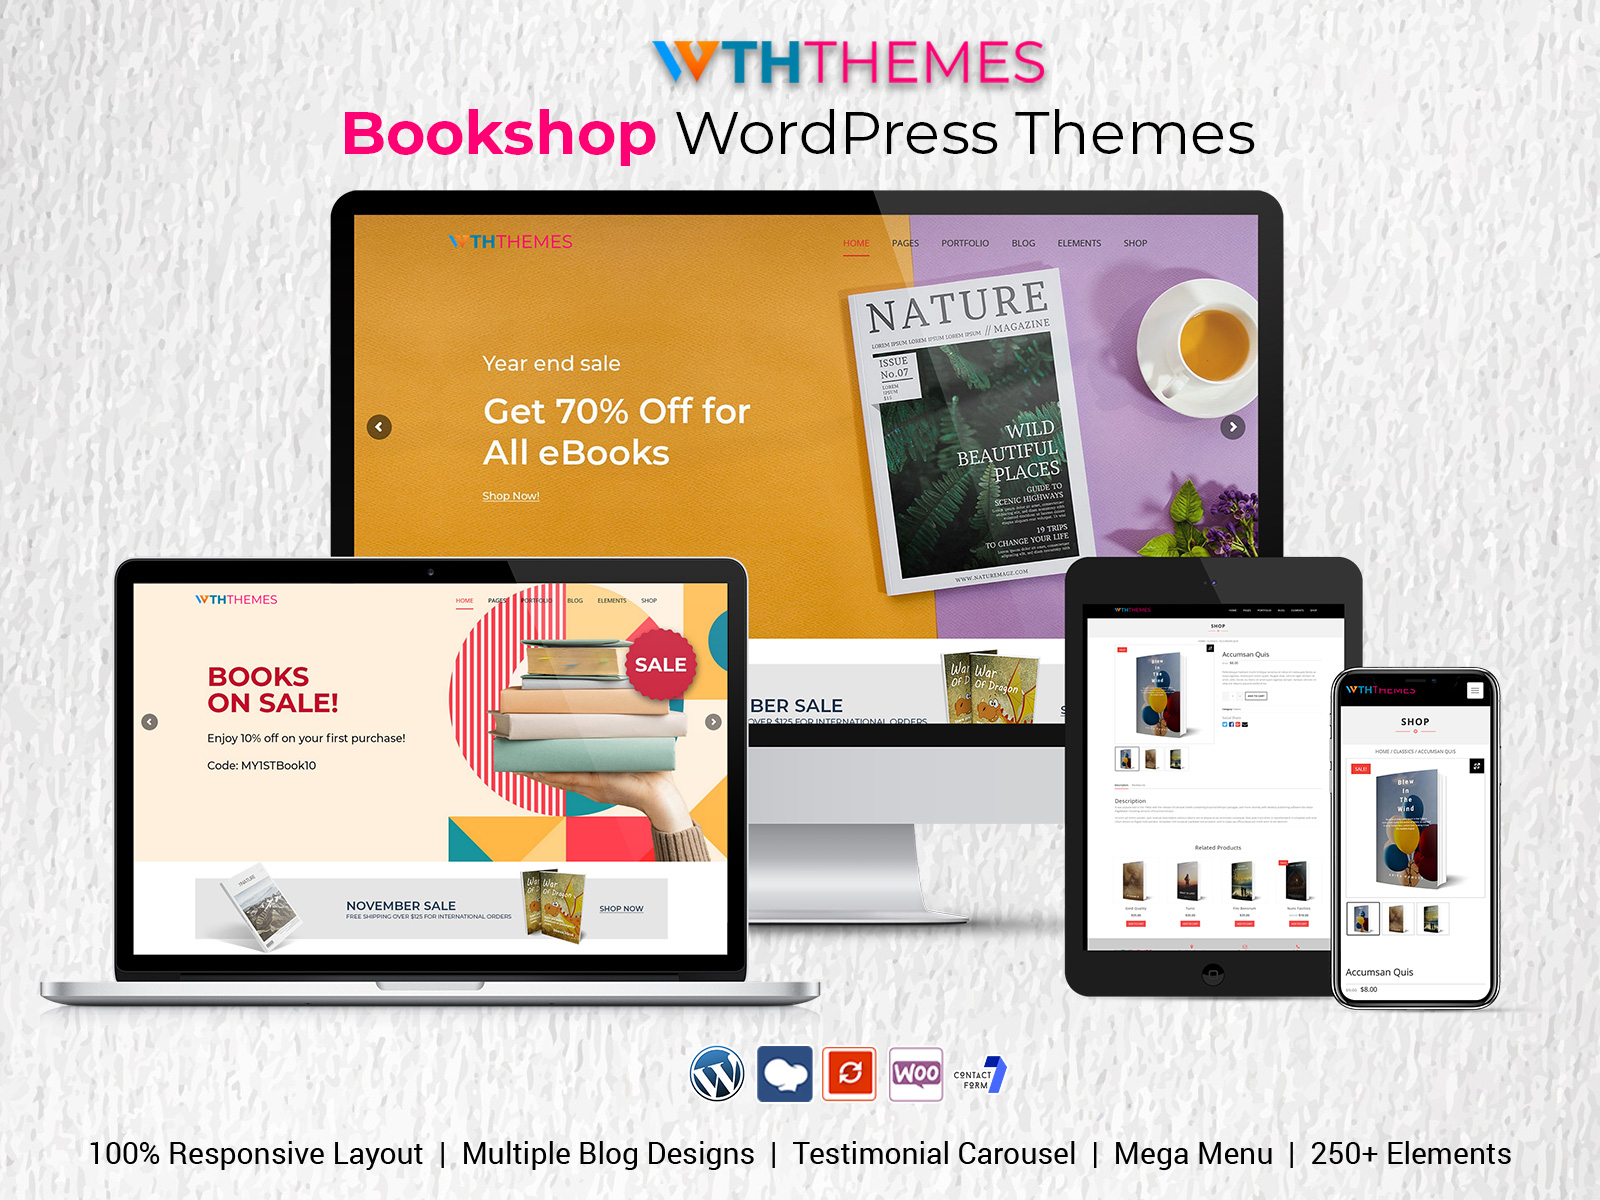 Bookshop WordPress Theme